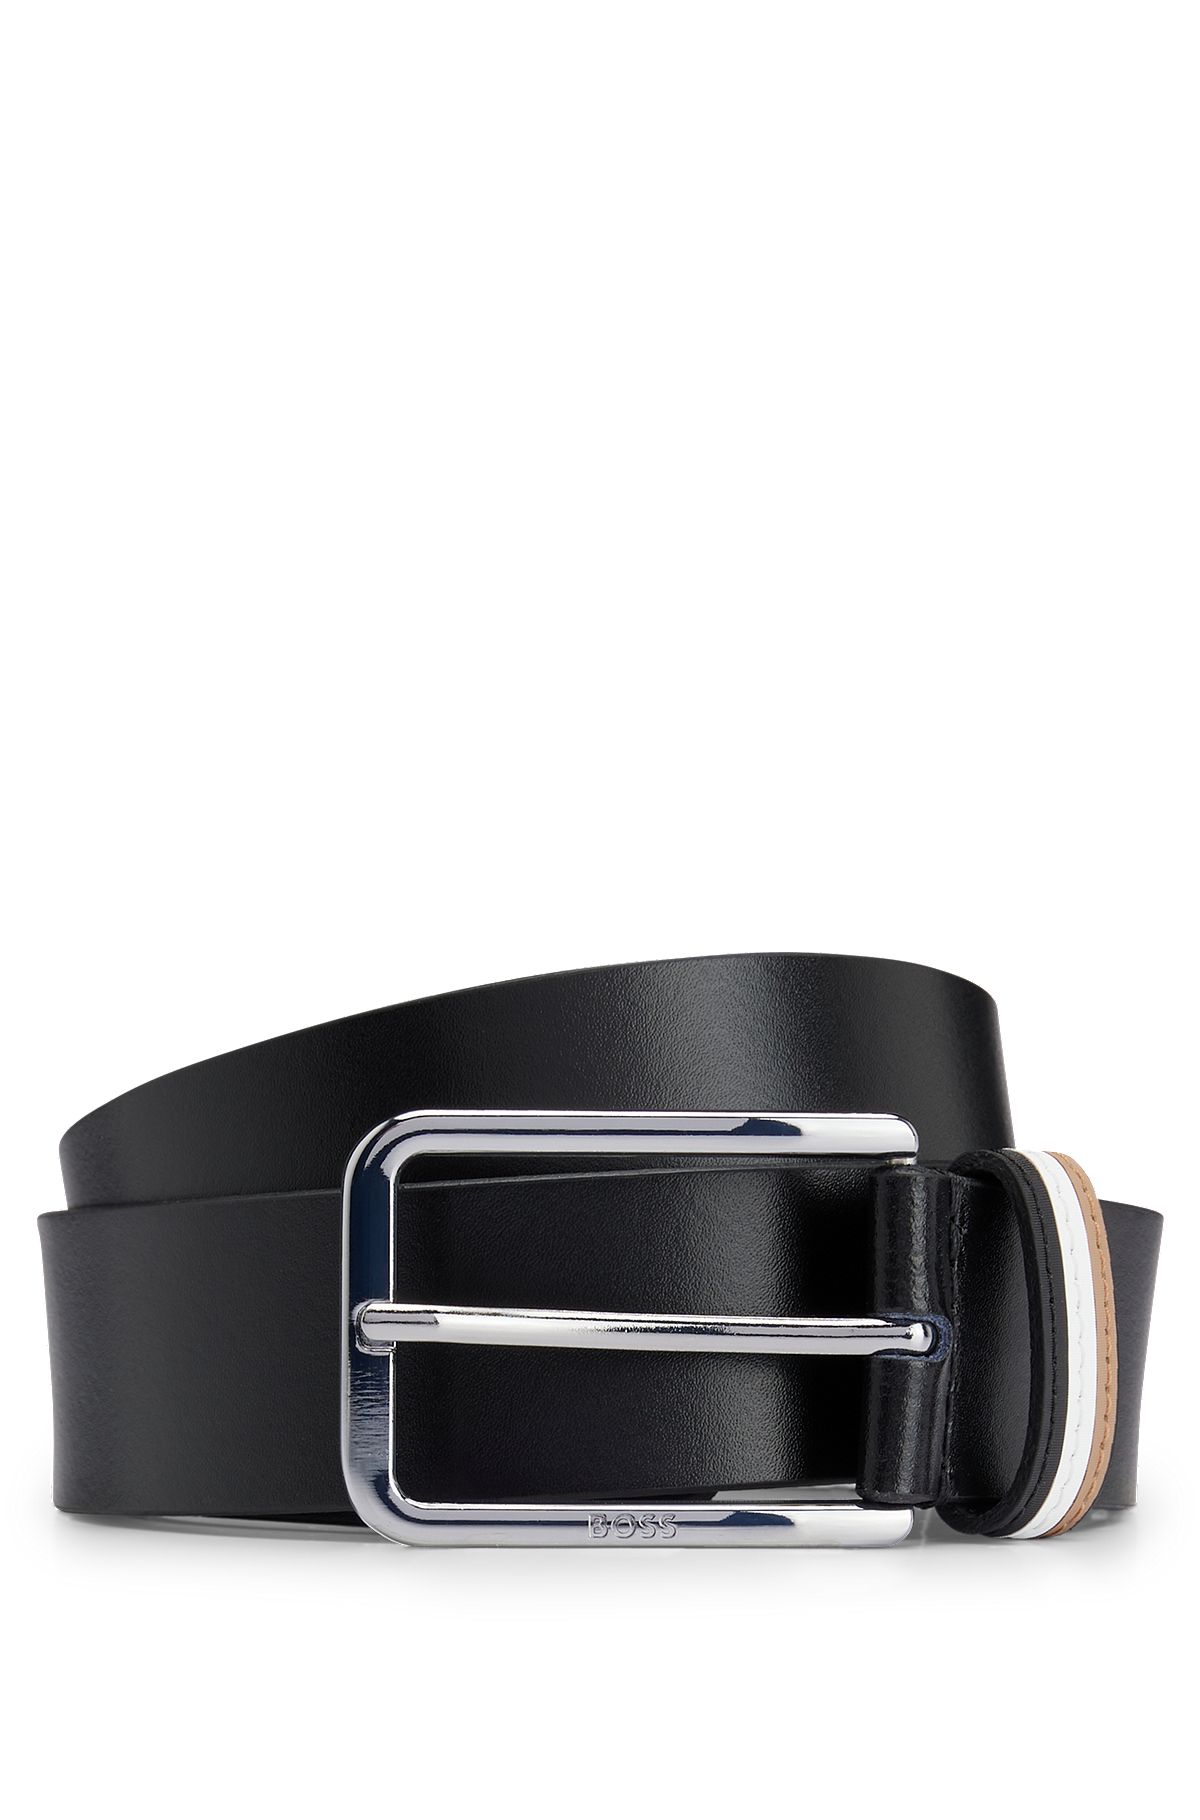 Italian-leather belt with signature-stripe keeper, Black